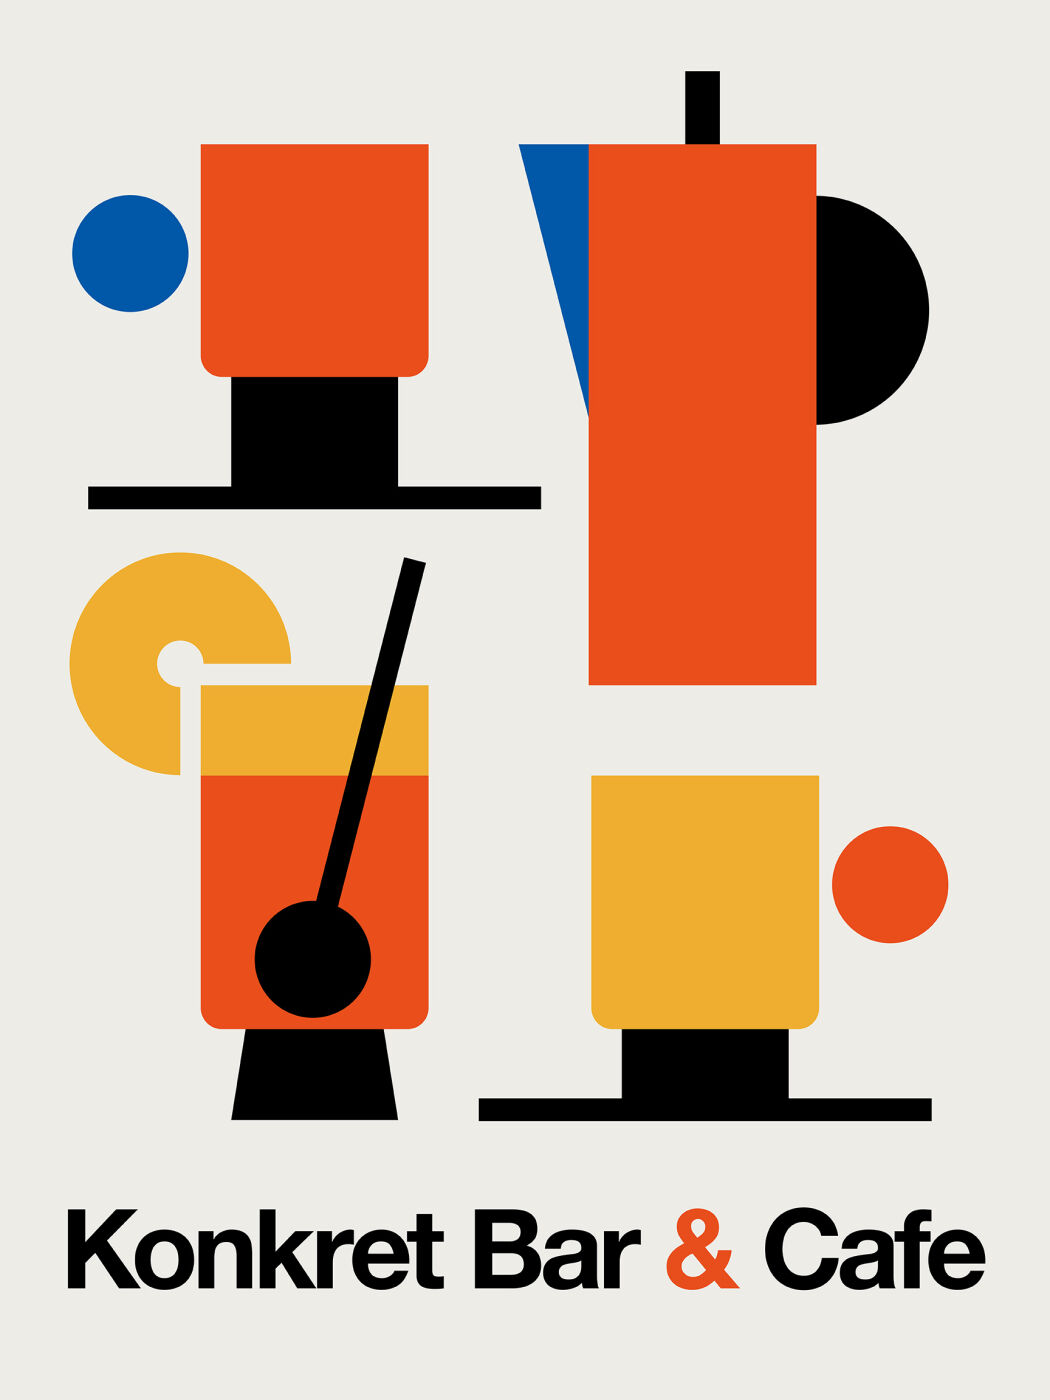 Bauhaus graphic art poster by Bo Lundberg